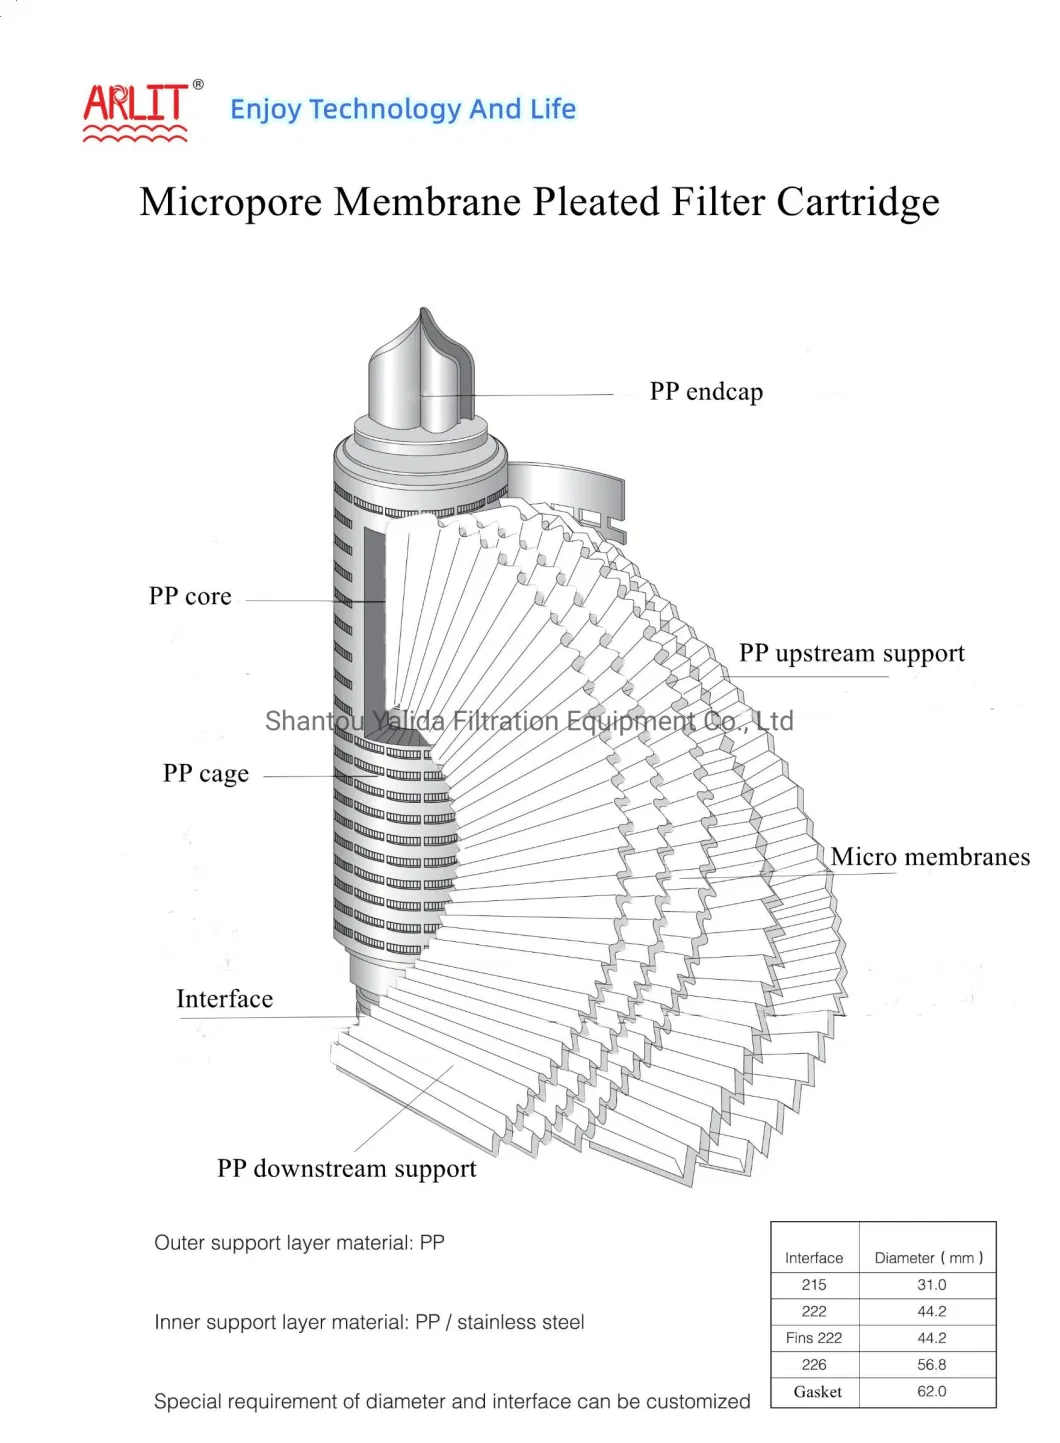 Liquid Sterilizing Filtration 30 Inches Hydrophilic PTFE Microporous Filter Cartridge